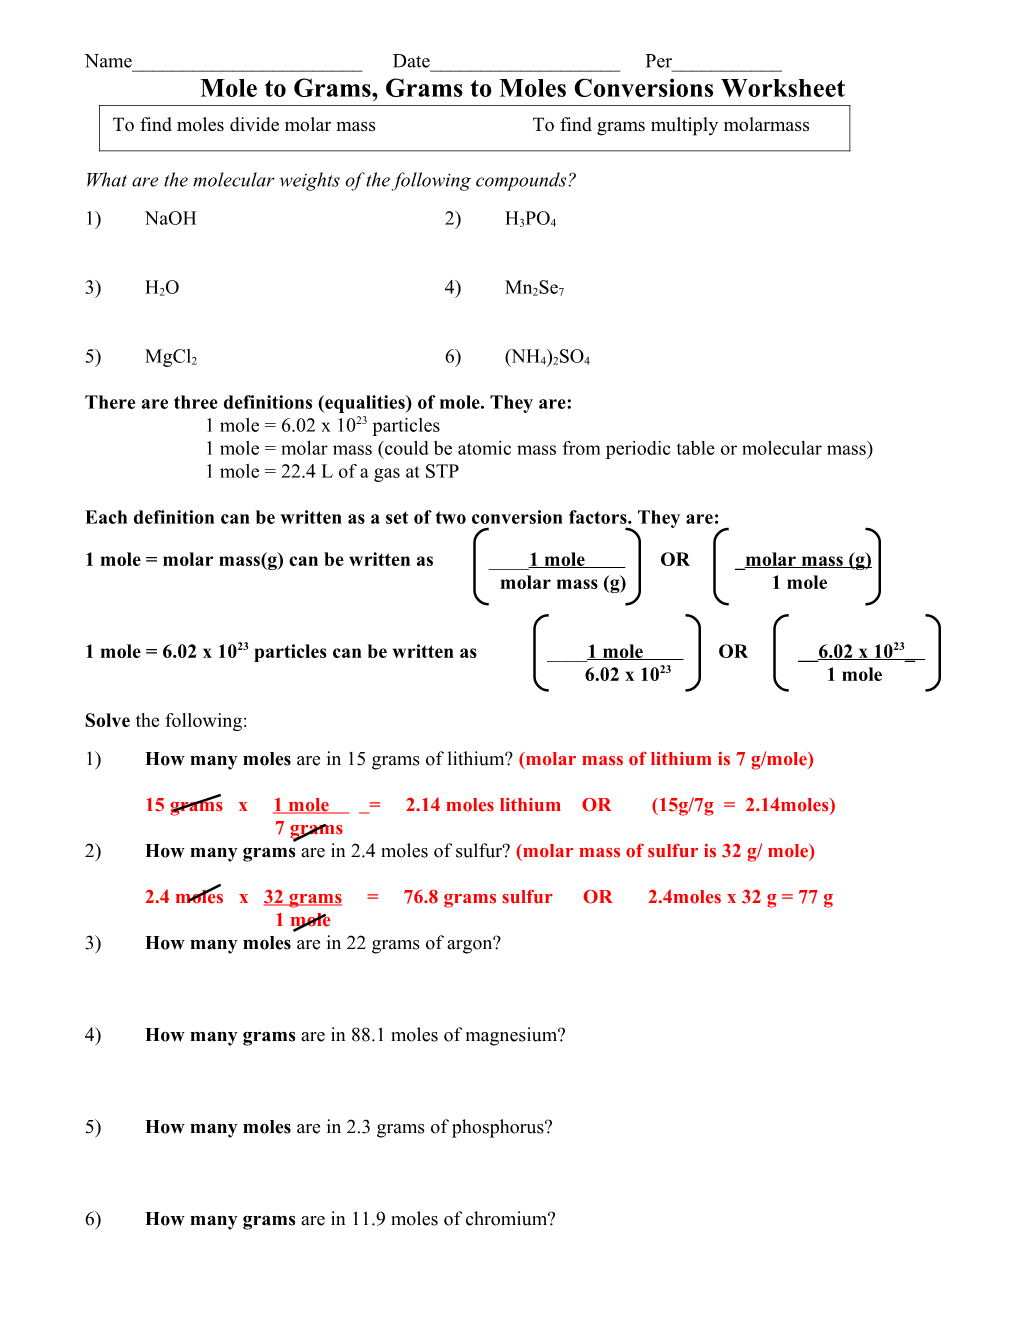 Mole Calculation Worksheet